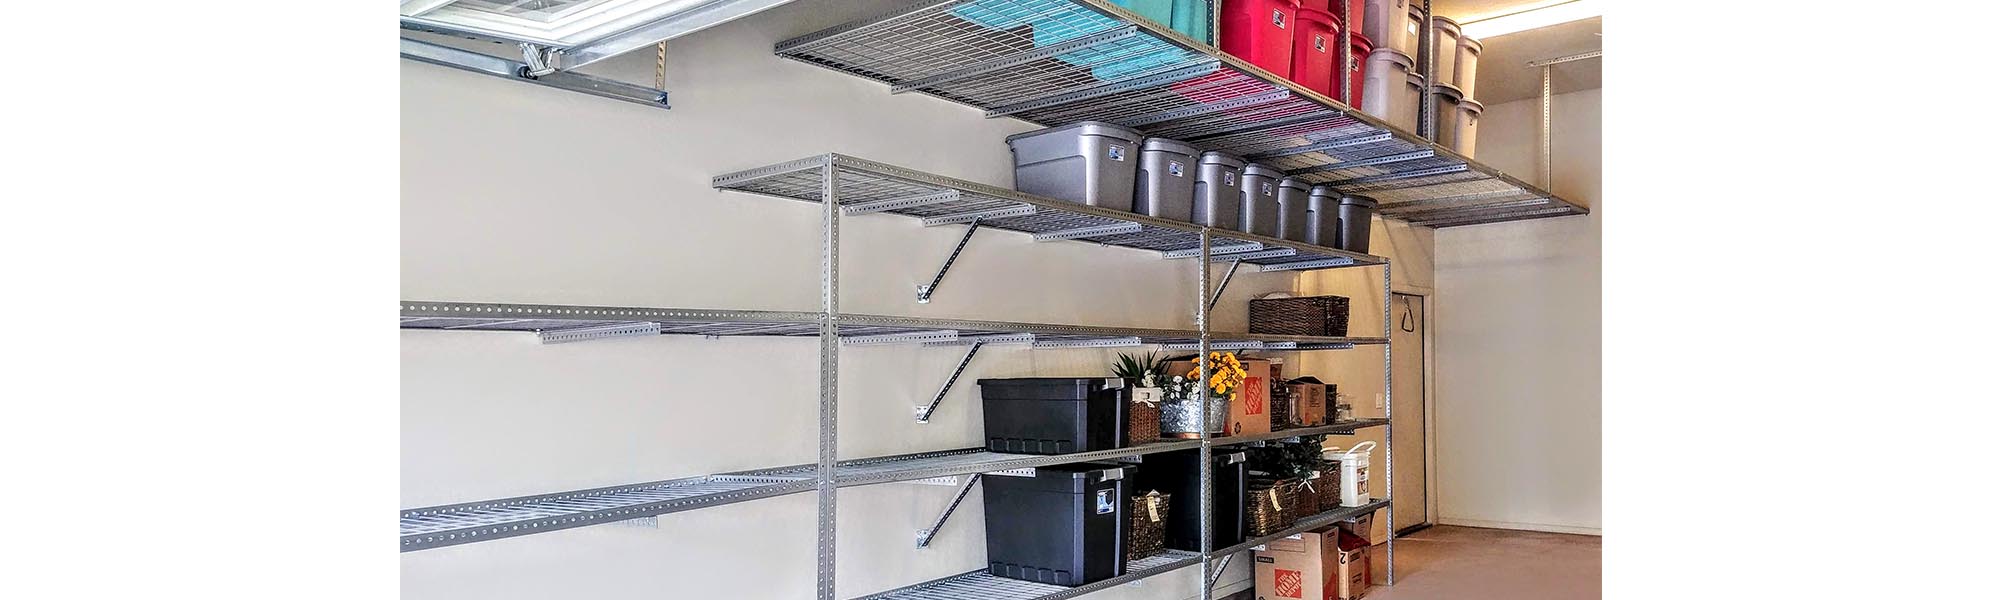 Overhead Garage Storage Shelves In, Installing Wire Shelving In Garage